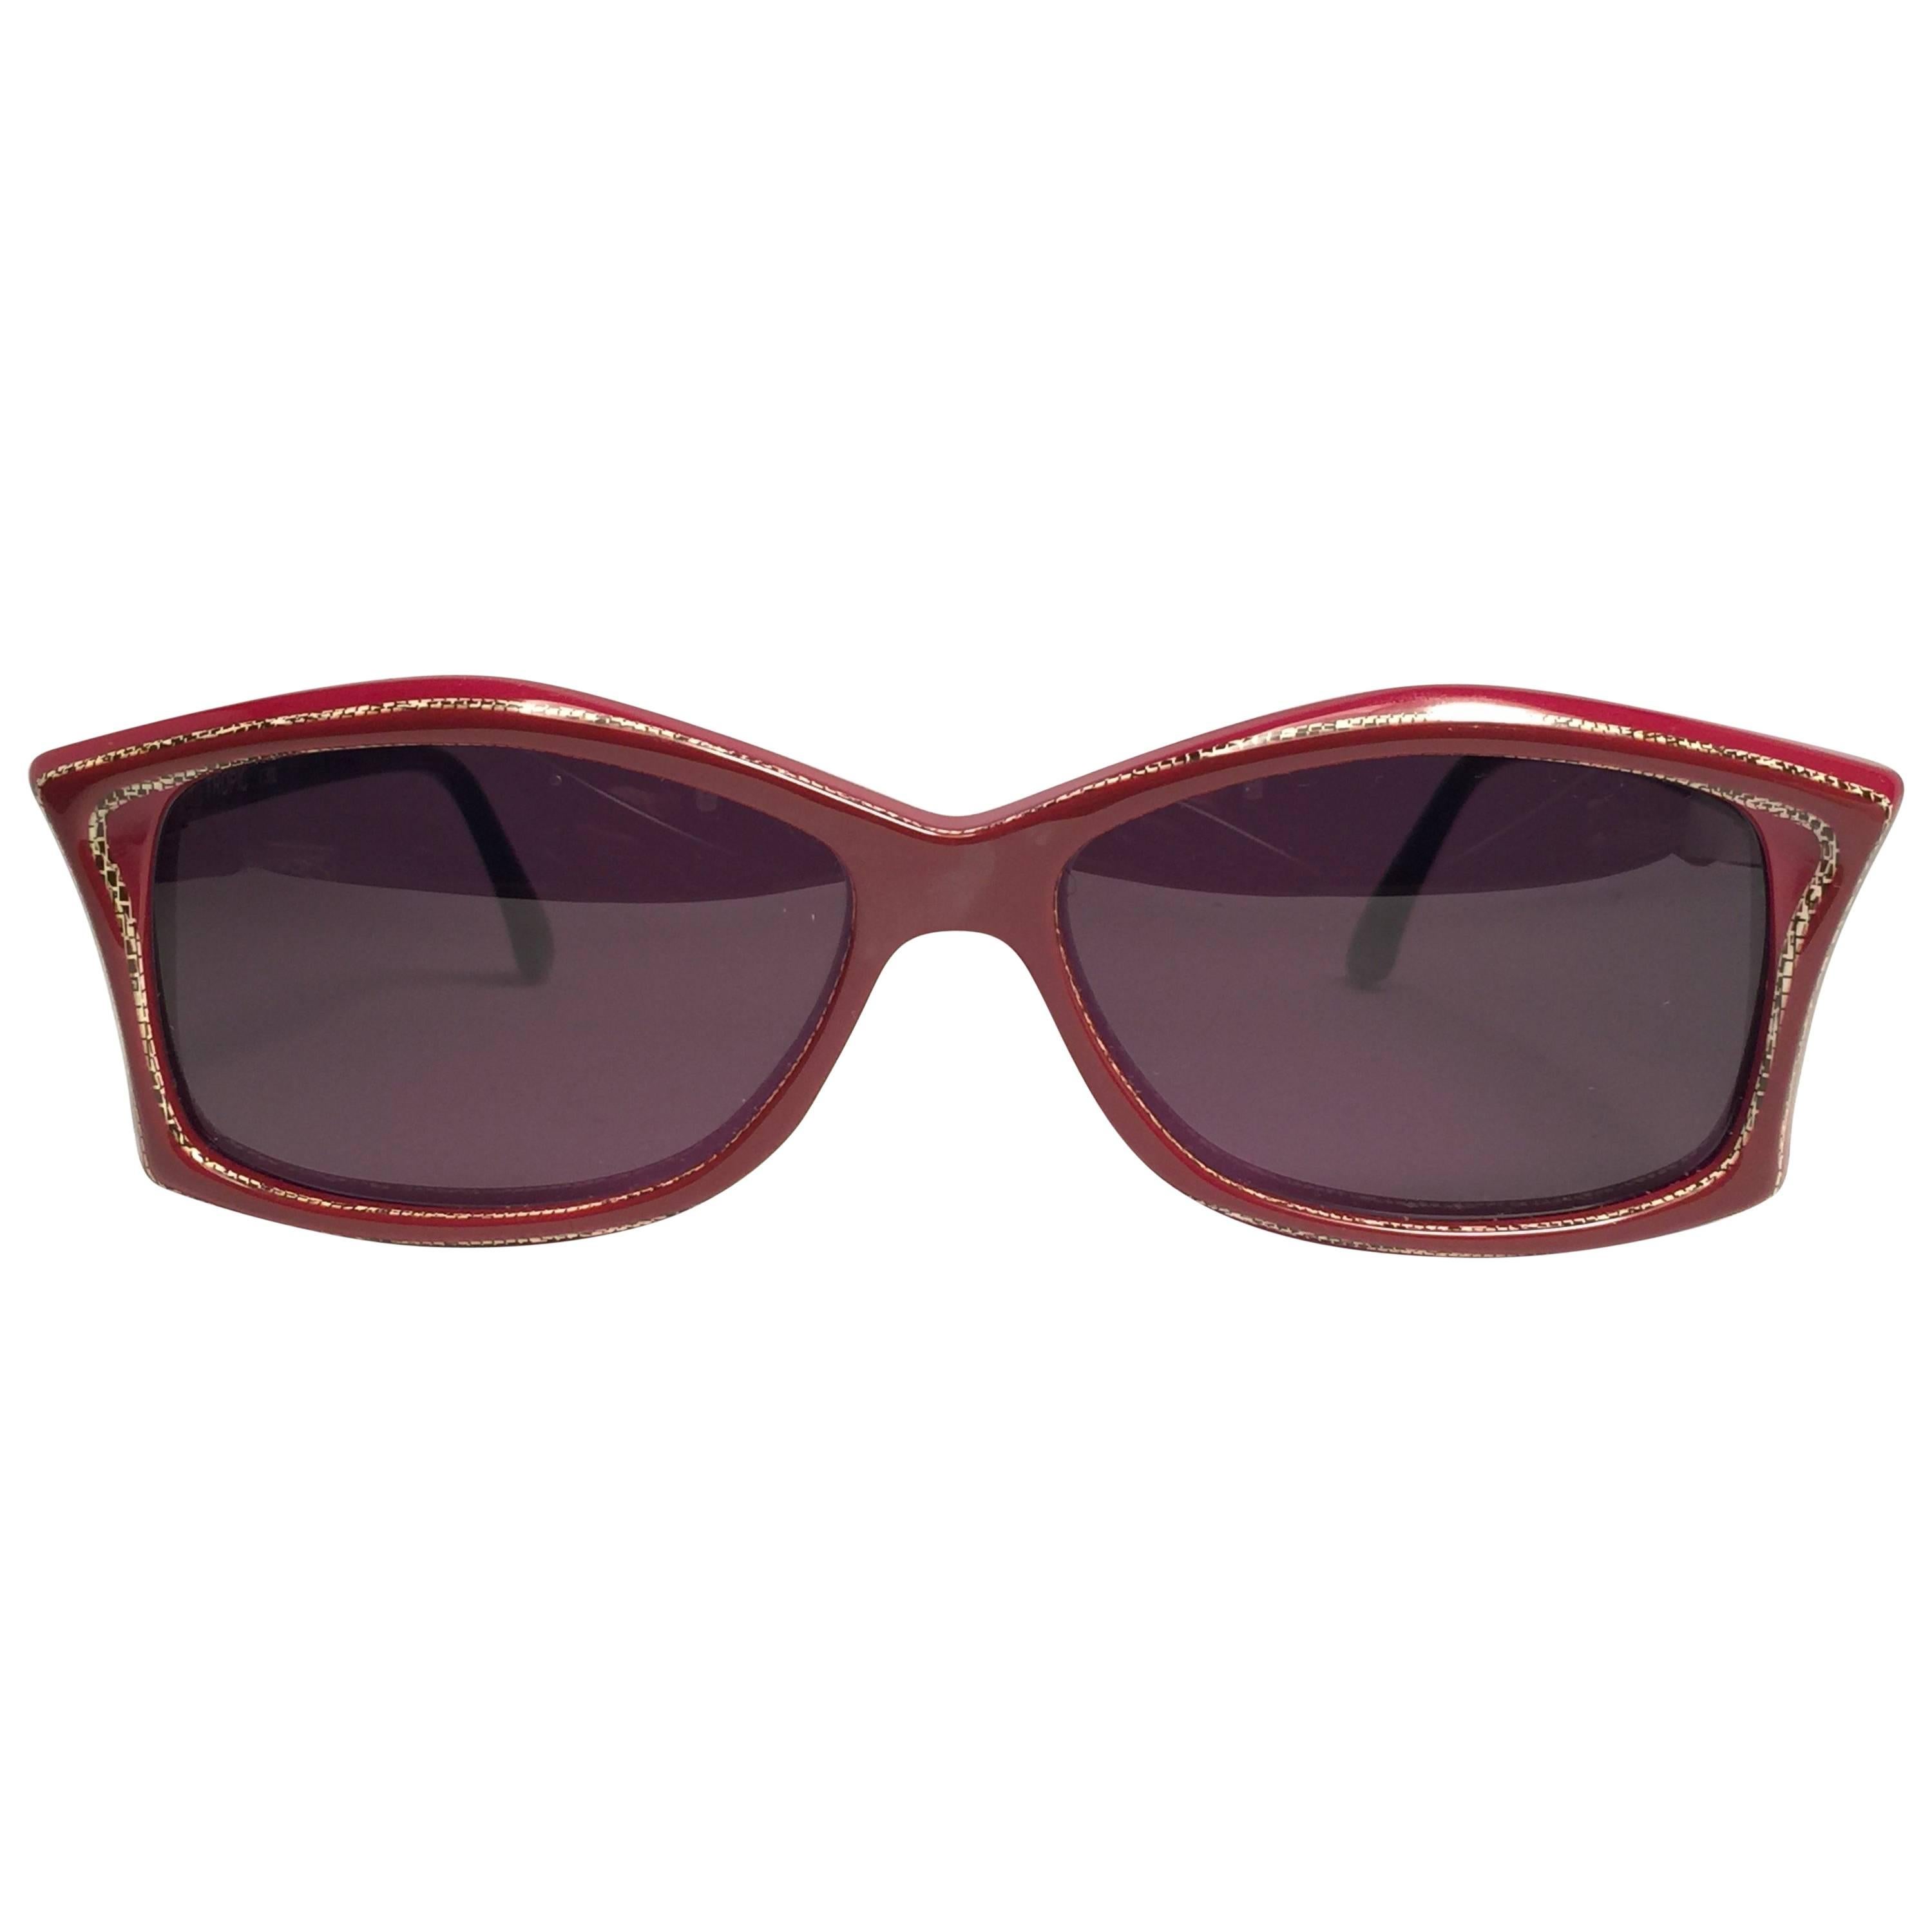 New Vintage Rare Pierre Marly Tropic Burgundy Avantgarde 1960 Sunglasses